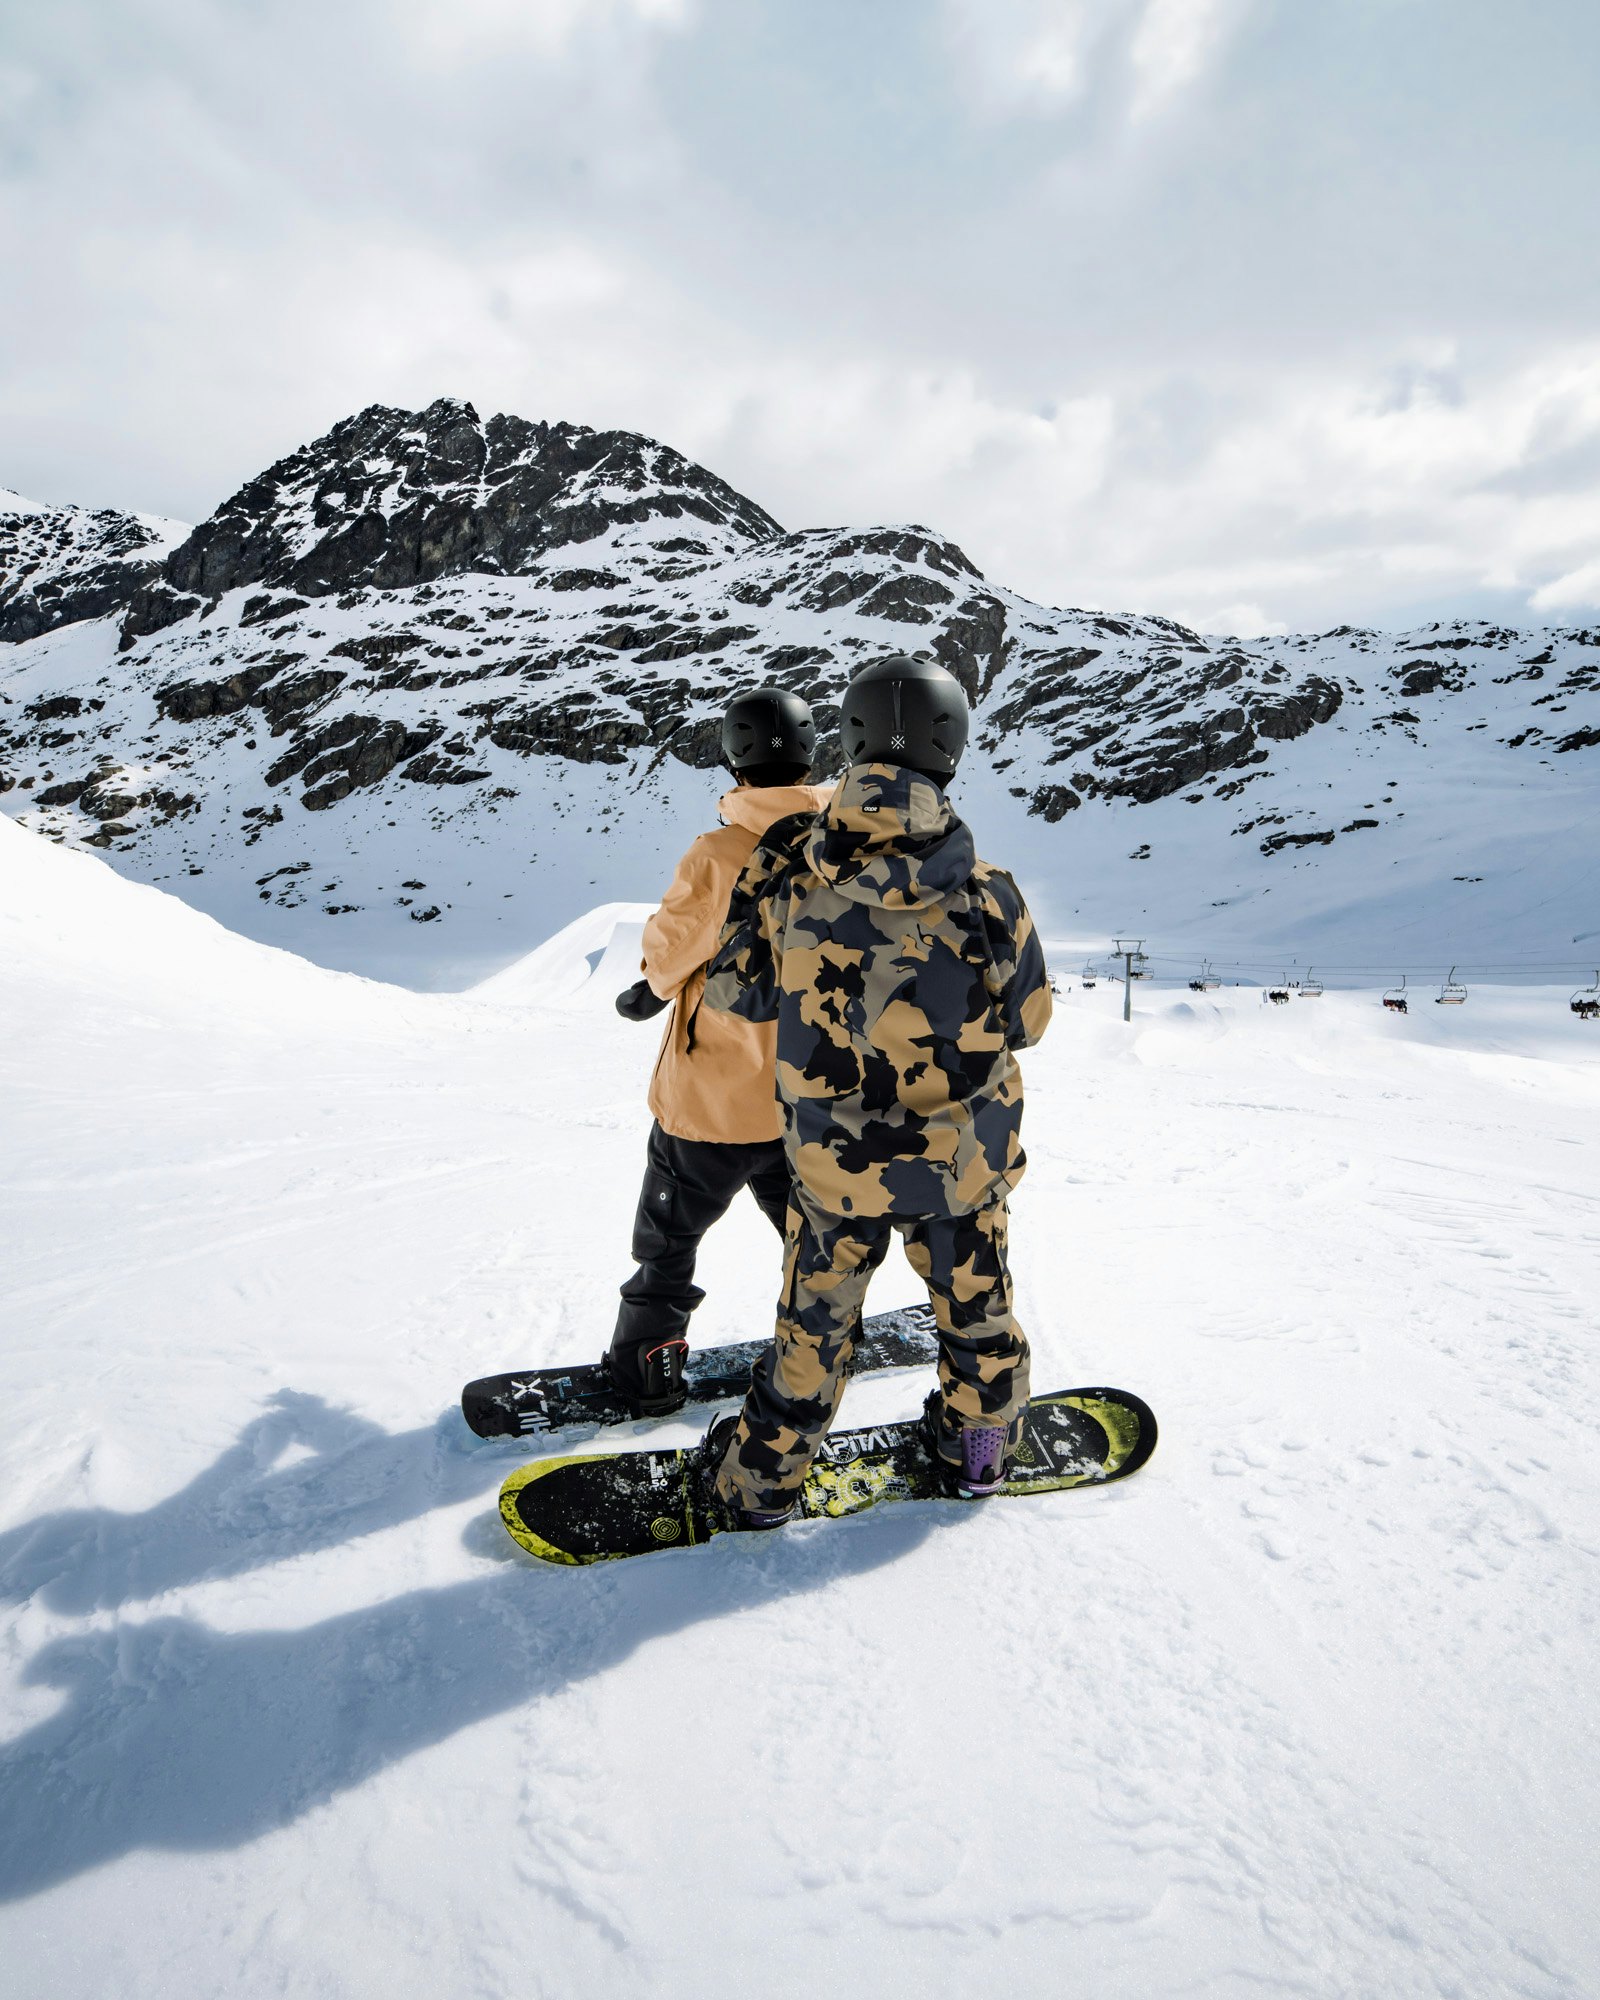 Snowboards freeride